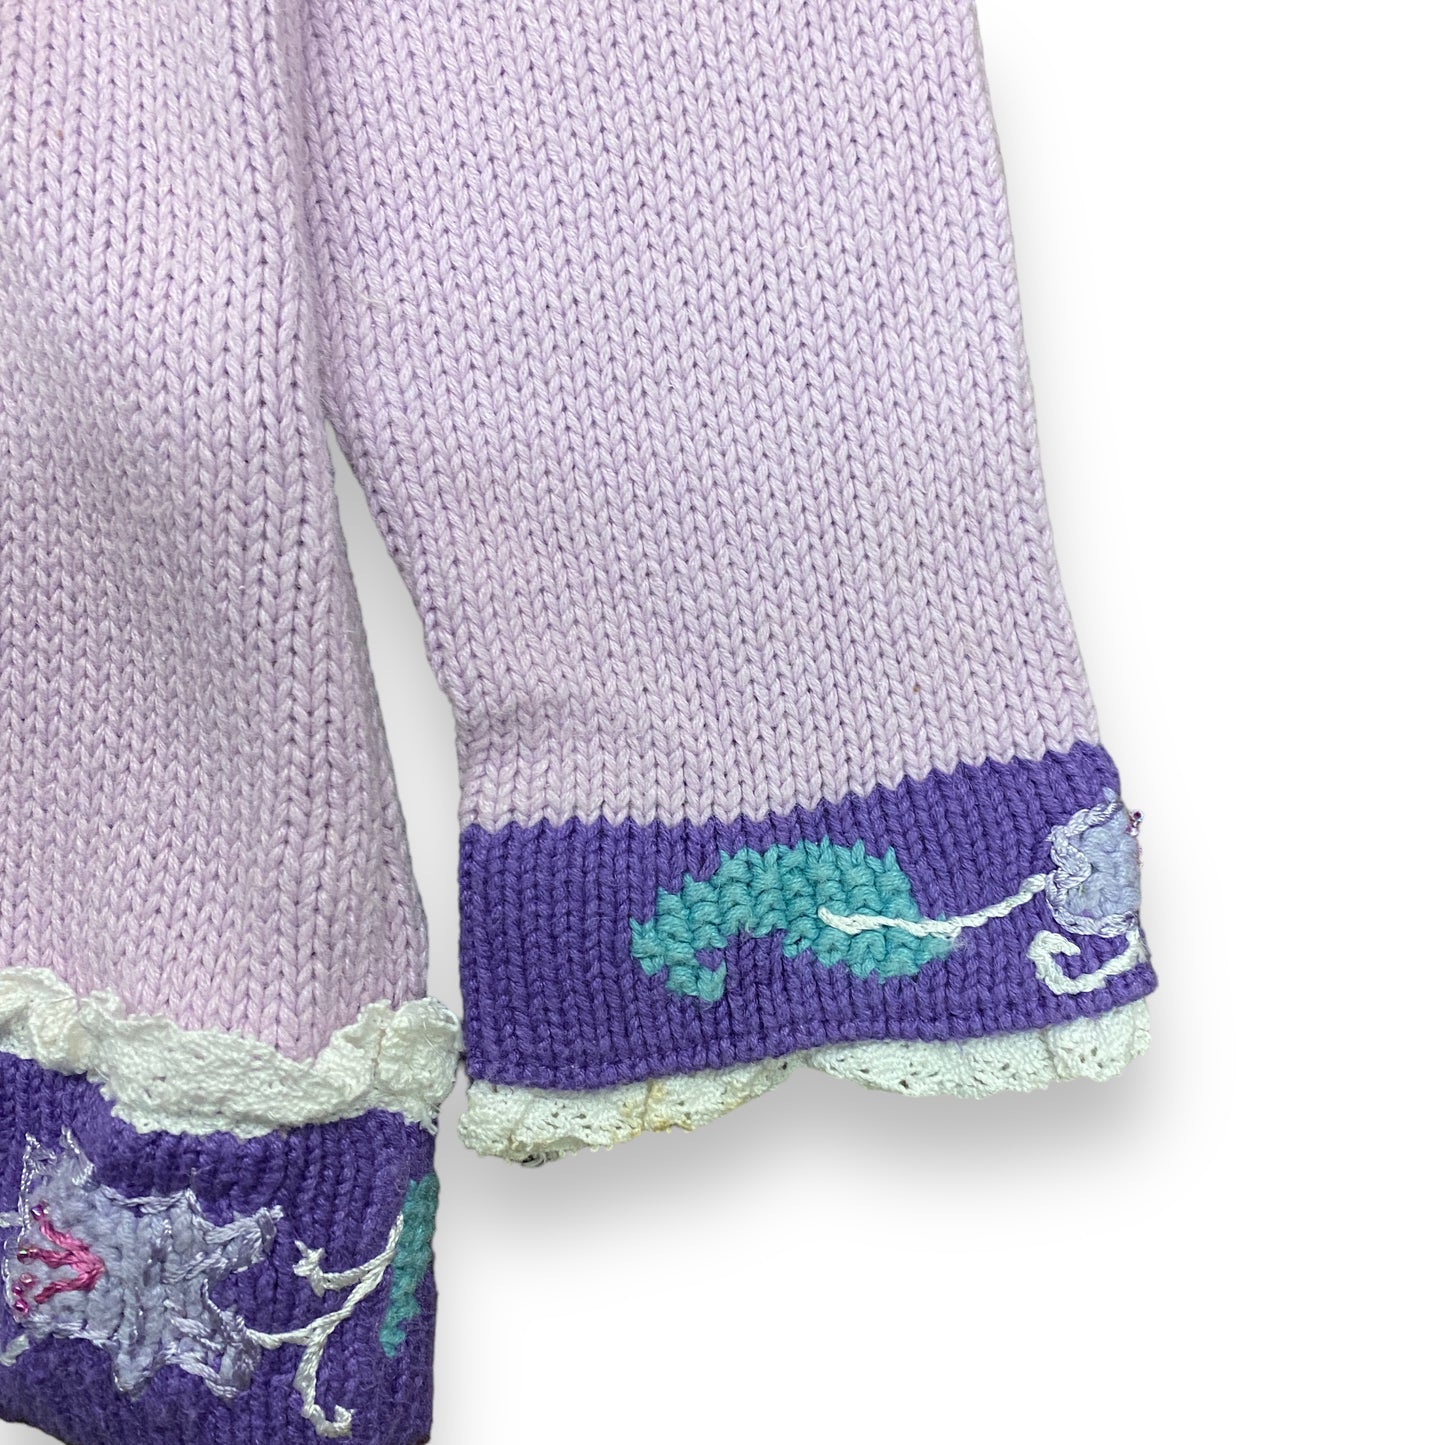 Vintage Hand-Knit Unicorn Cardigan Sweater - Size Small